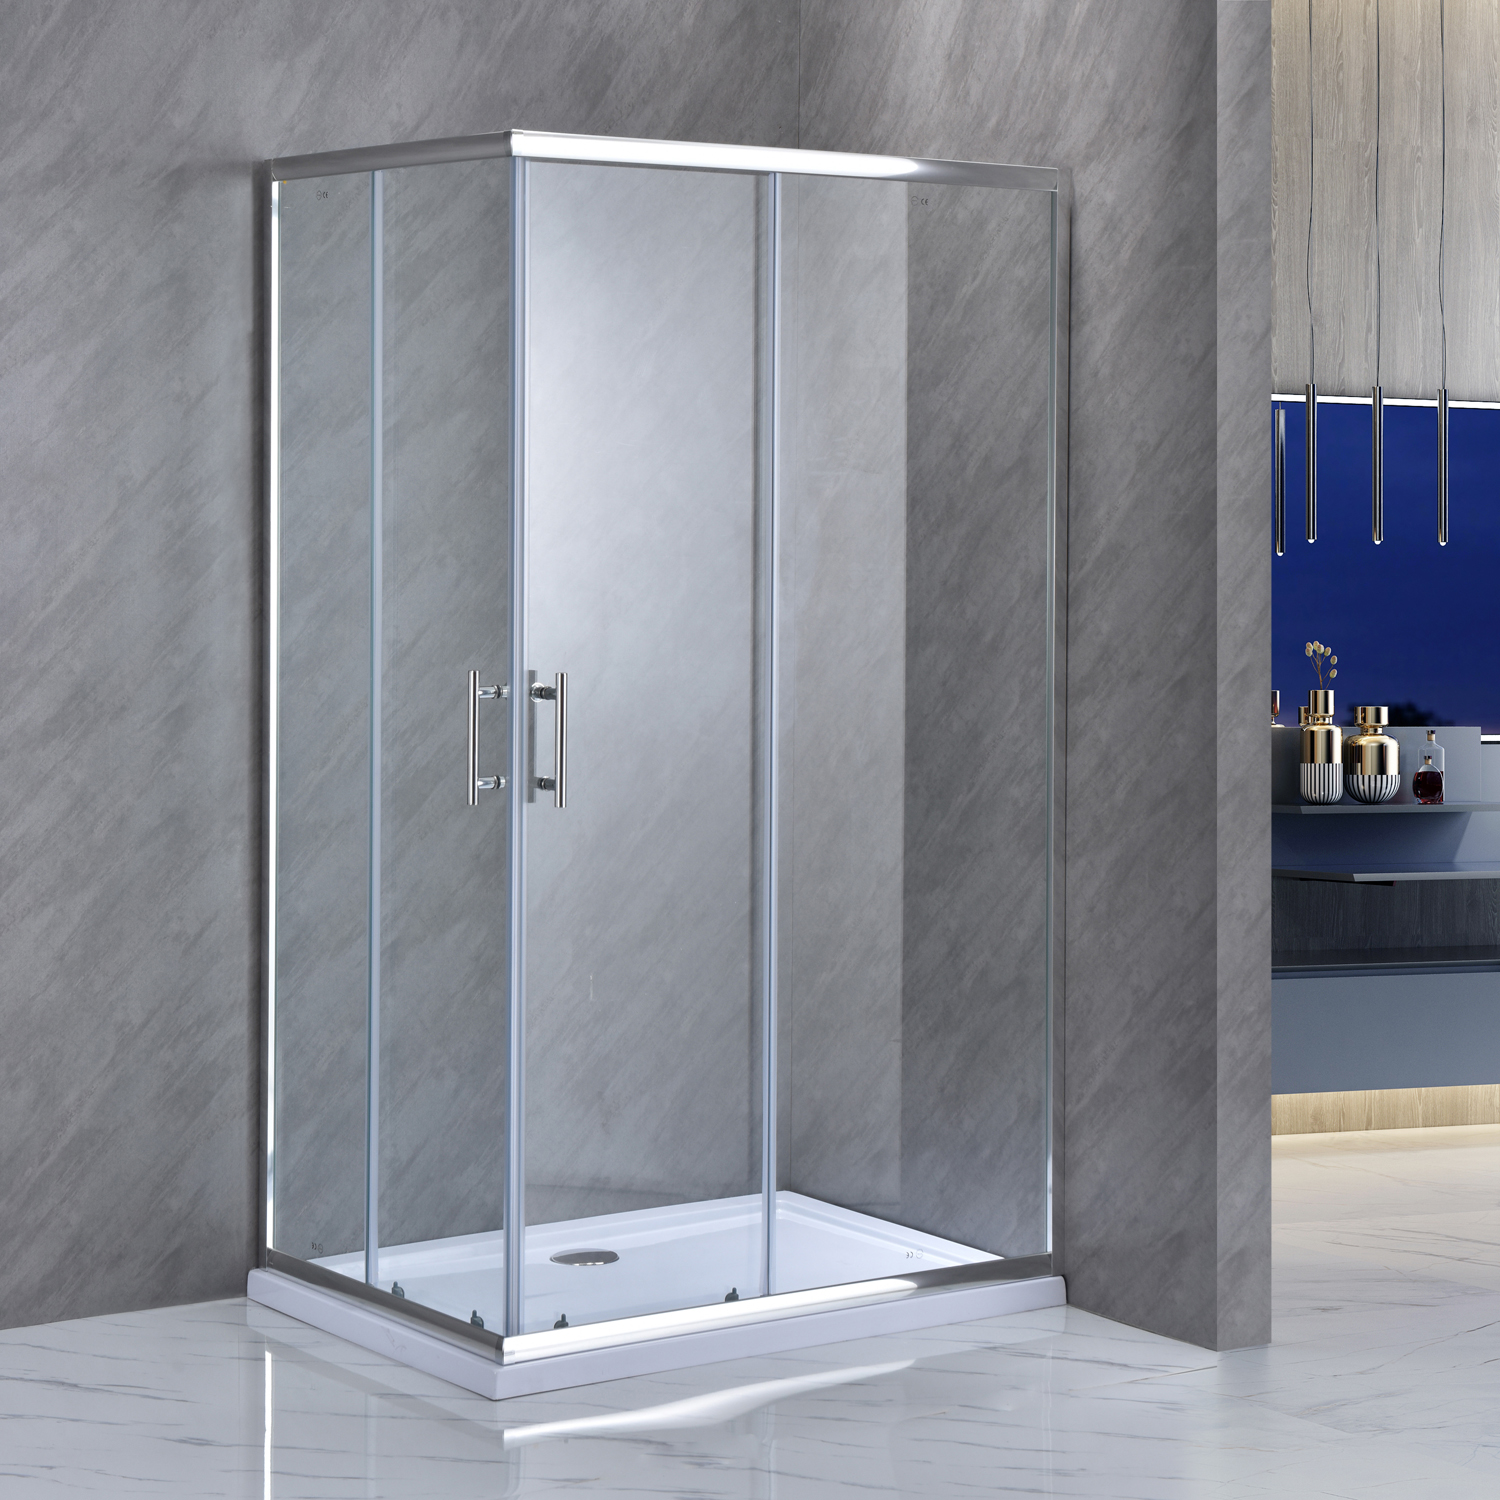 Italian style shower enclosure SE-111